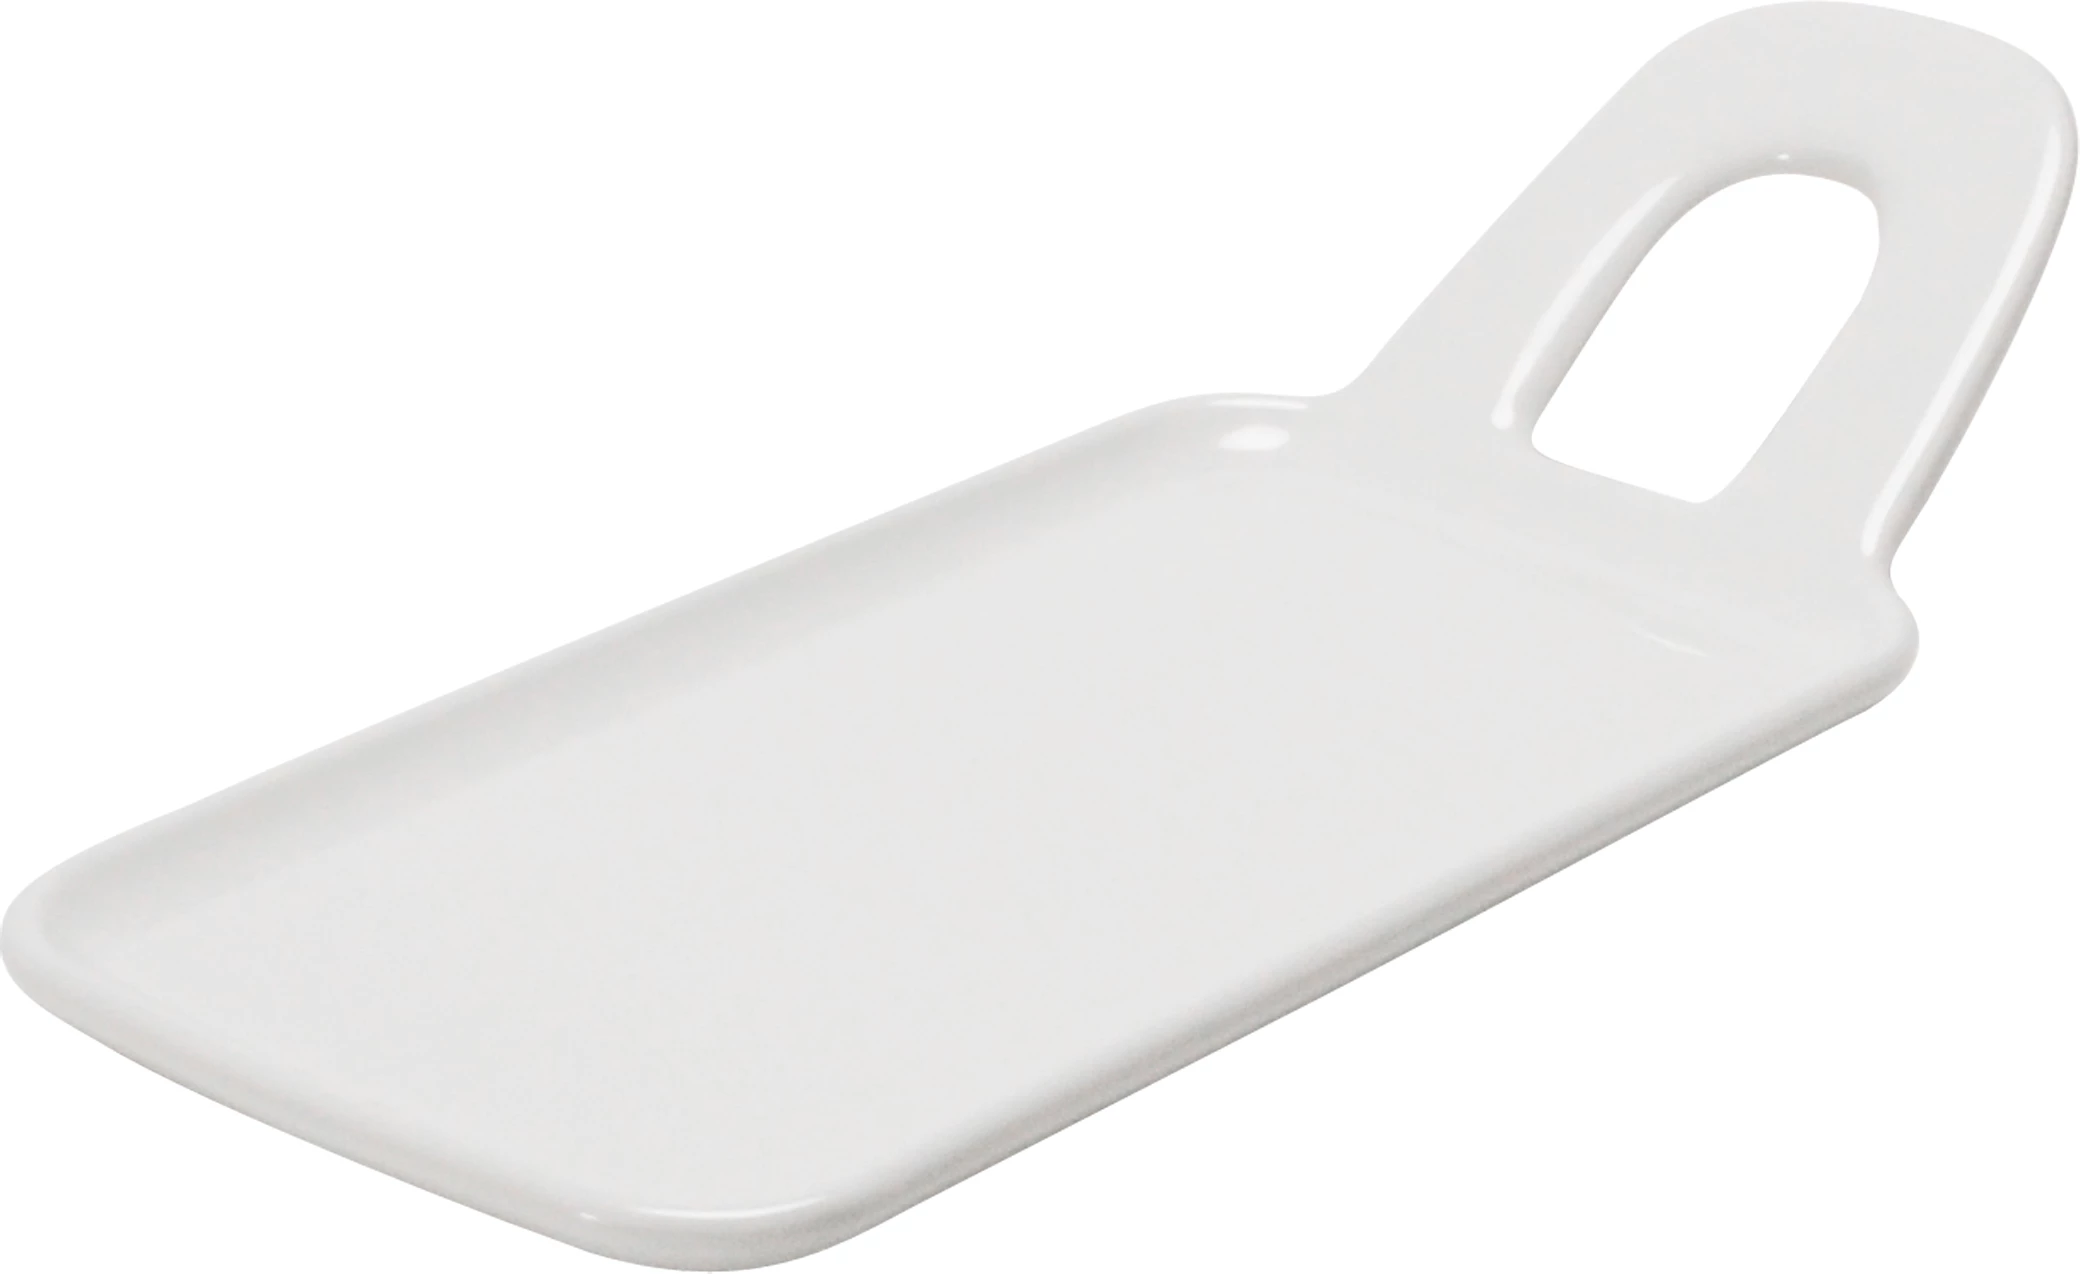 Figgjo Base flad tallerken med håndtag, 24 x 10 cm